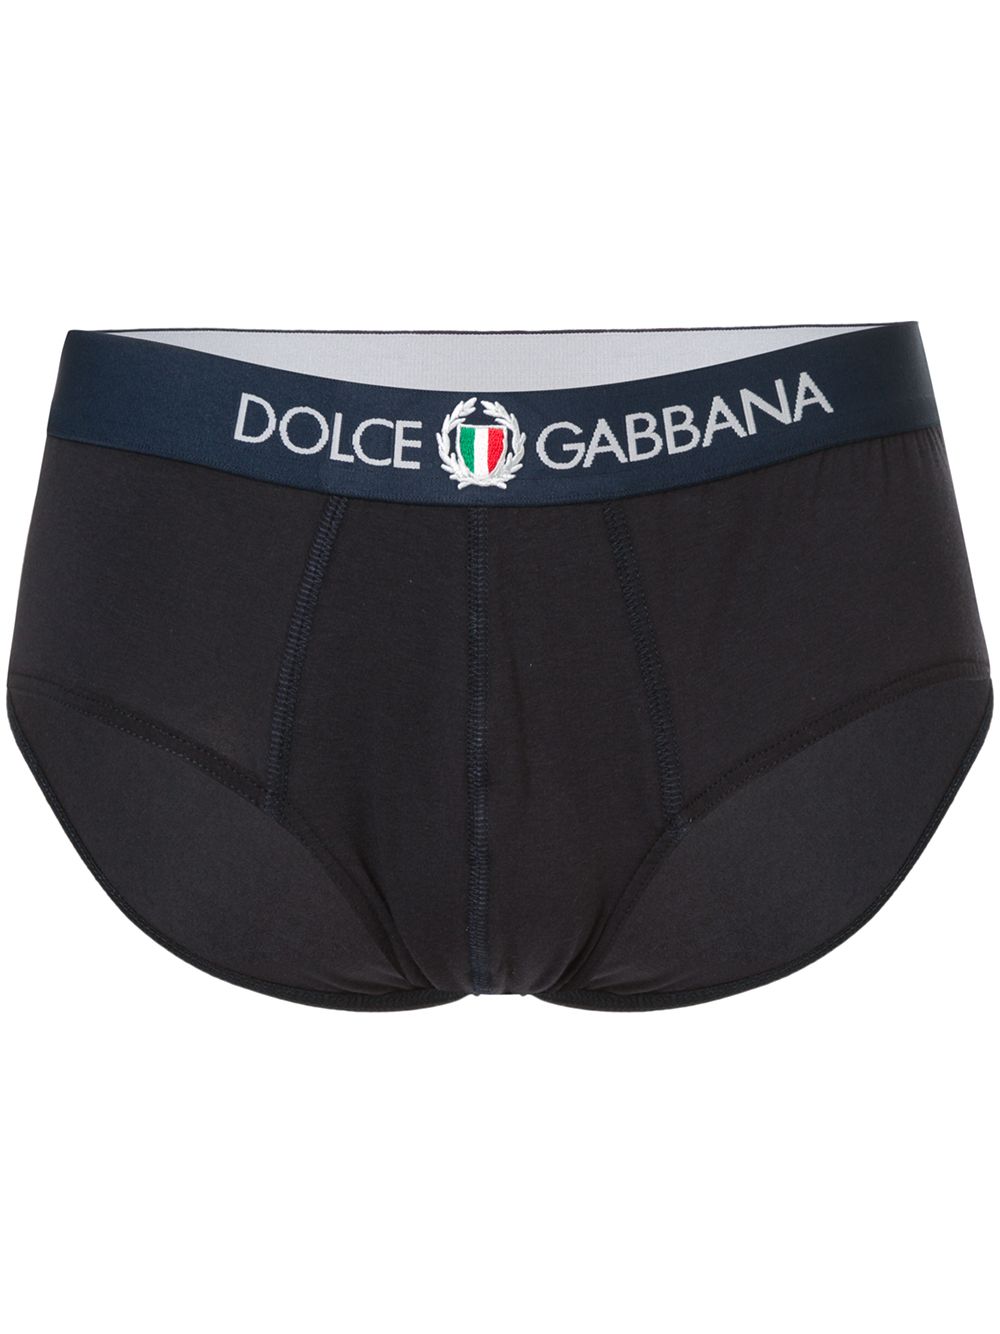 фото Dolce & gabbana underwear трусы-брифы с логотипом